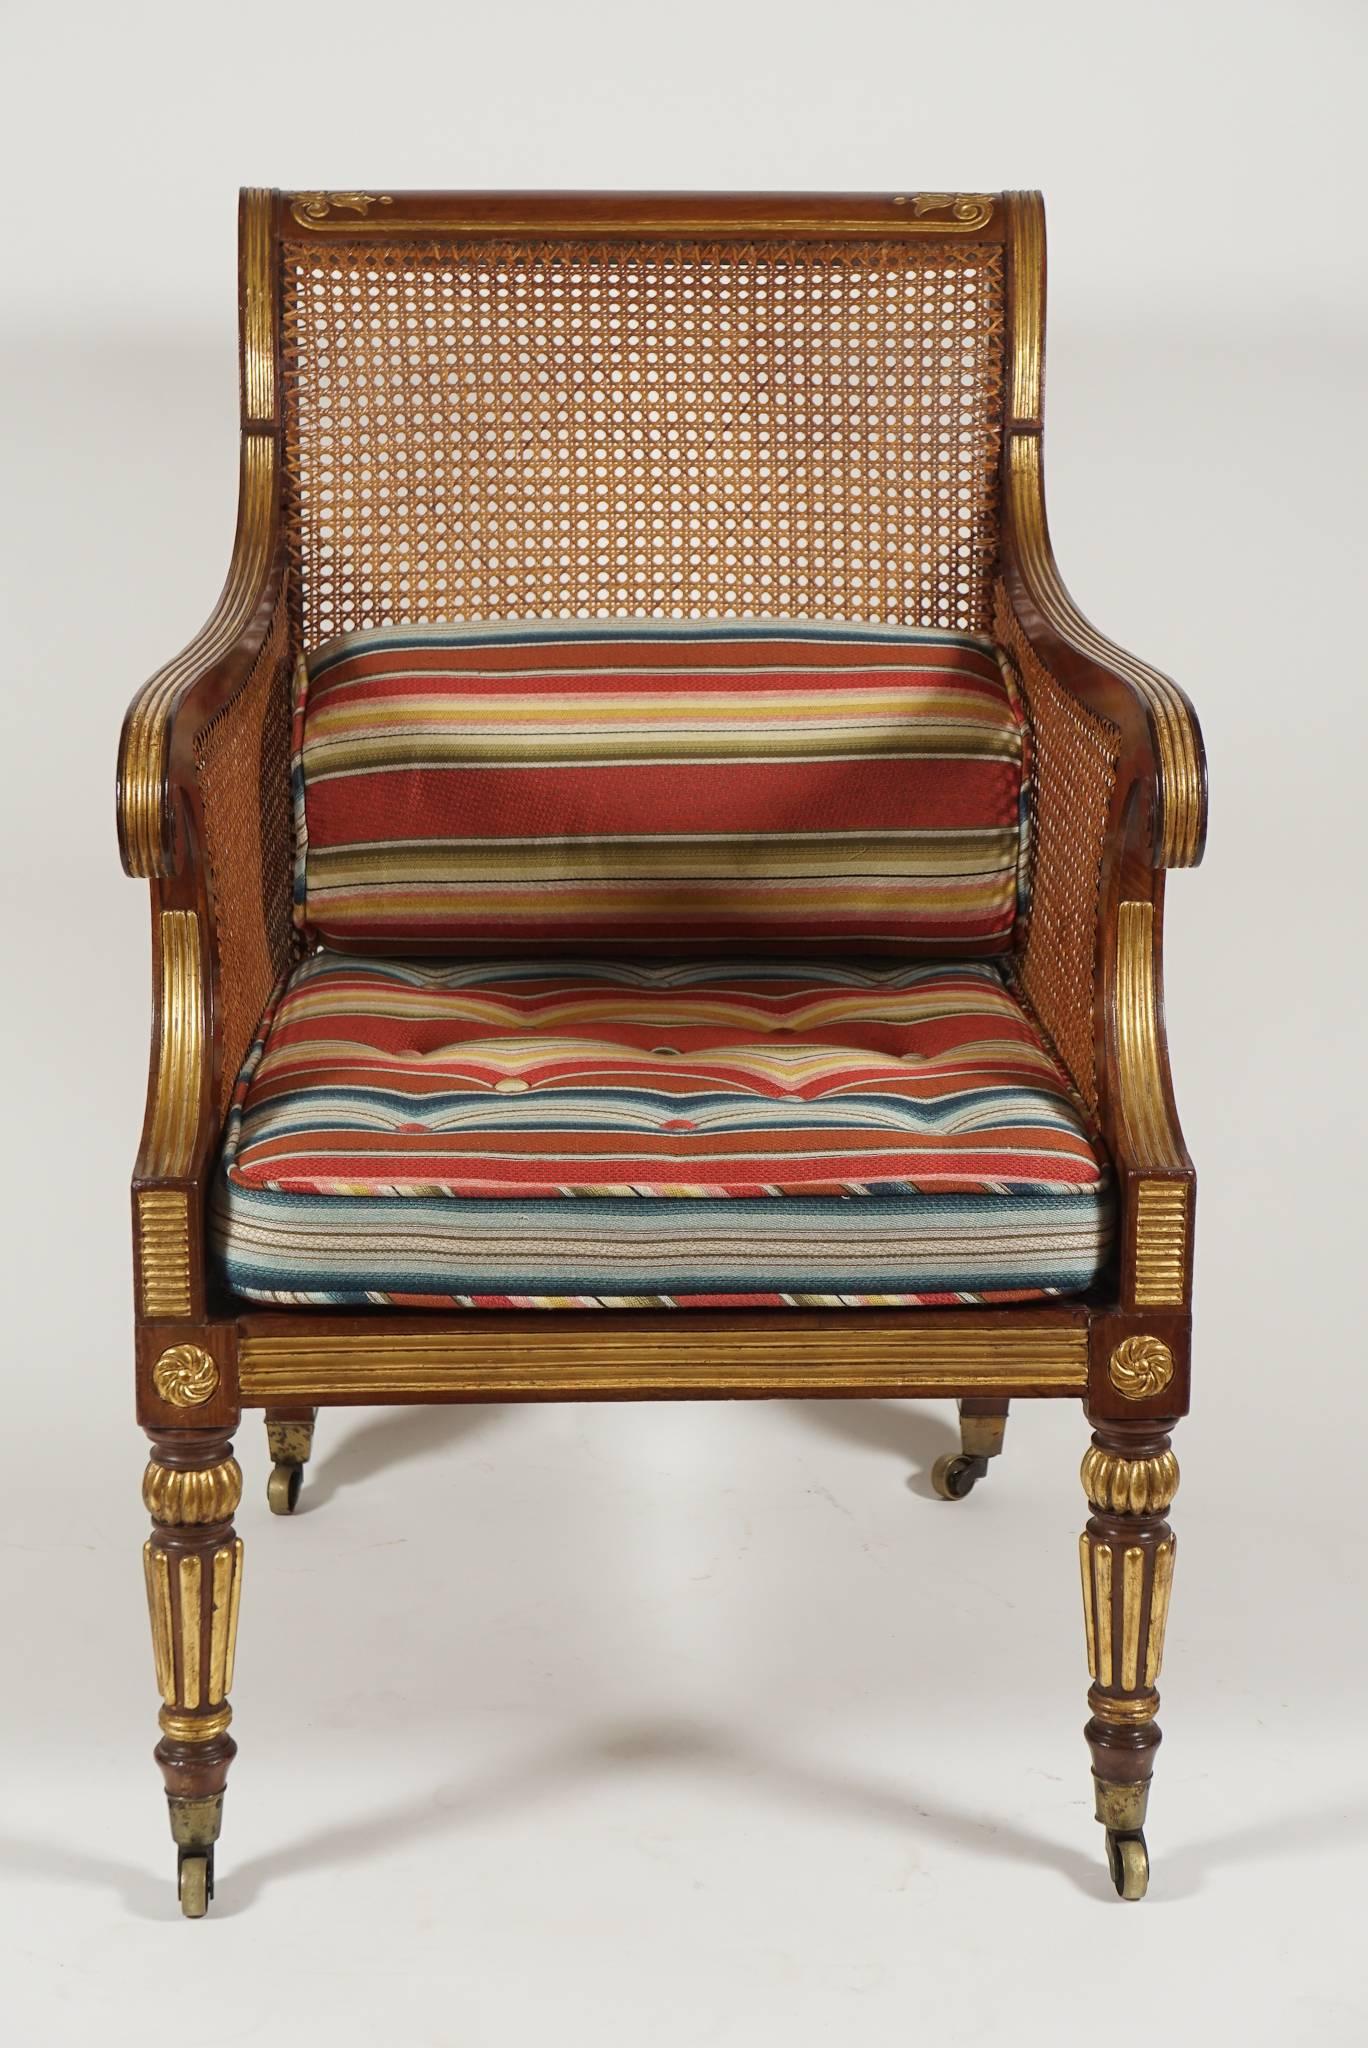 Carved Regency Parcel-Gilt Caned Armchair, England, circa 1810